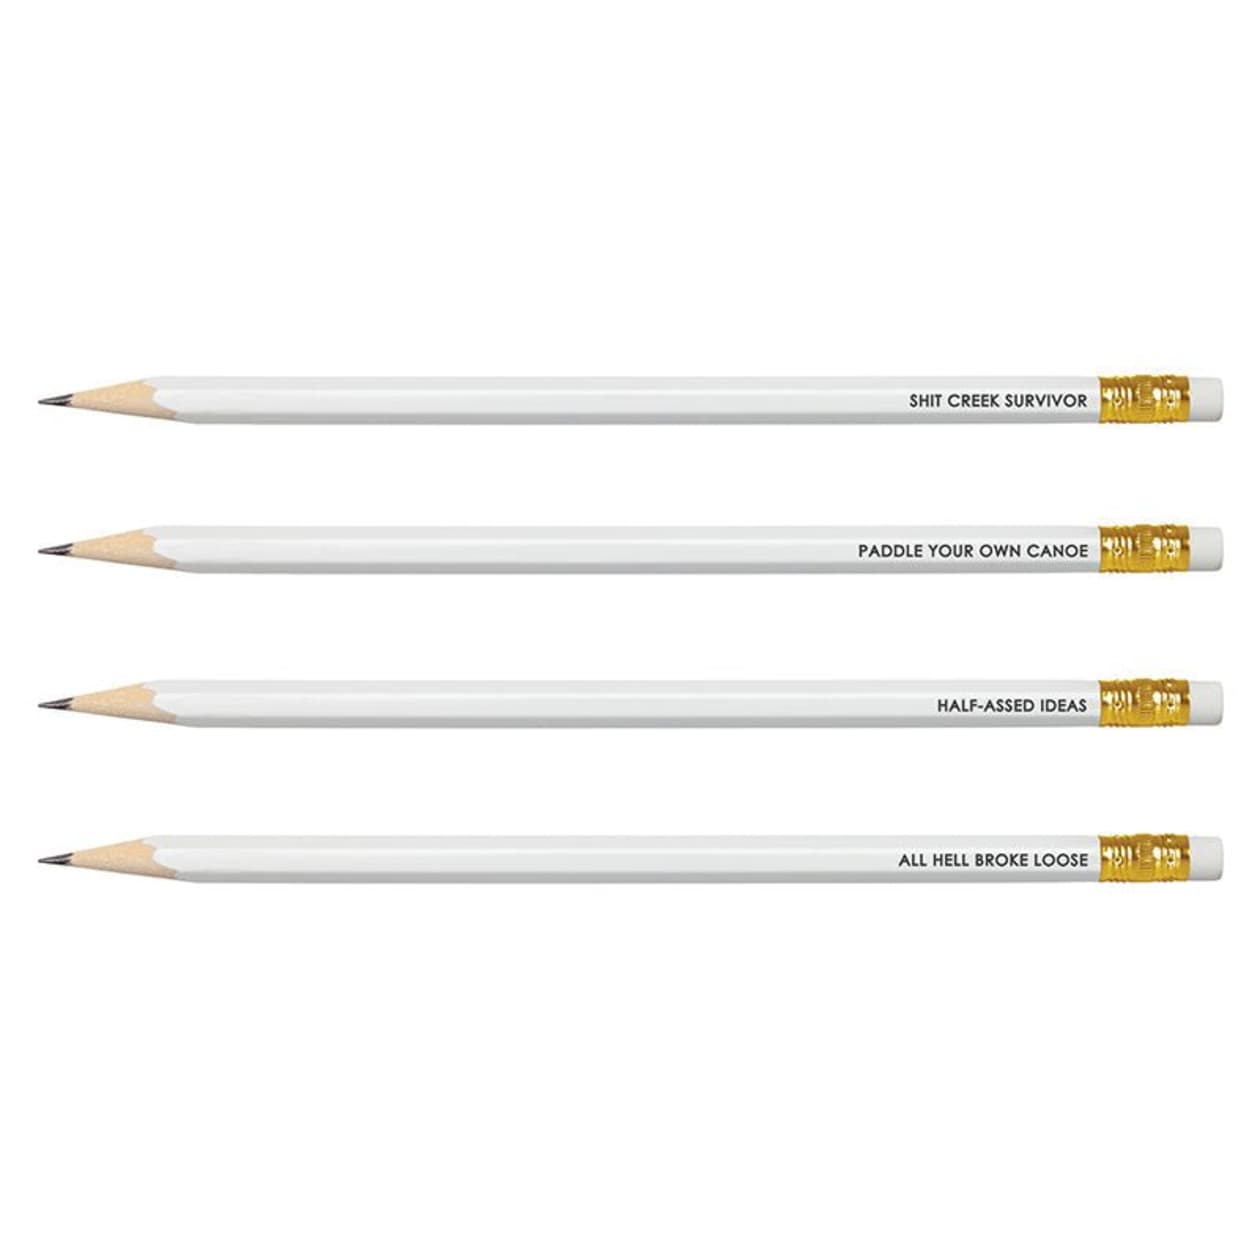 Shit Creek Survivor Wooden Pencil Set